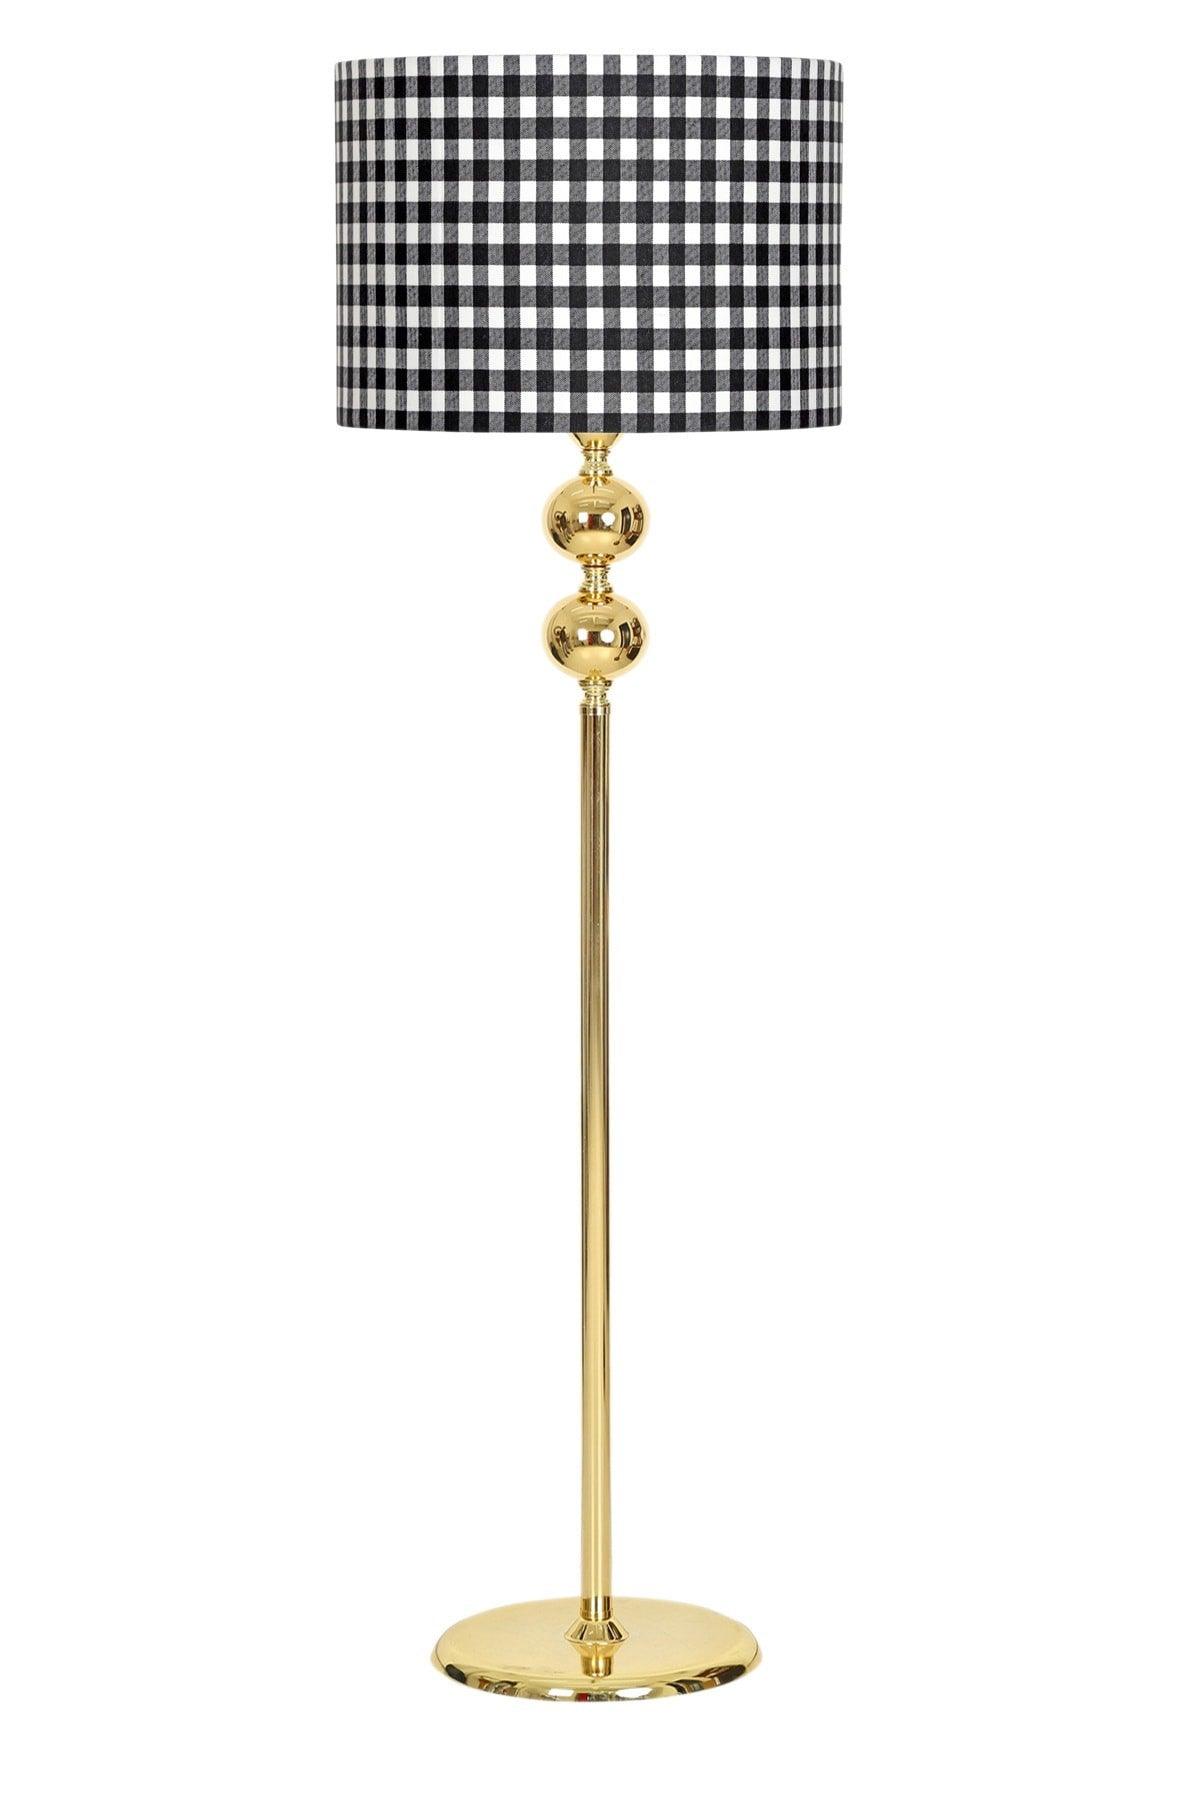 Cylinder Head Black Checker Gold Plated Double Sphere Metal Flat Single Leg Floor Lamp - Swordslife